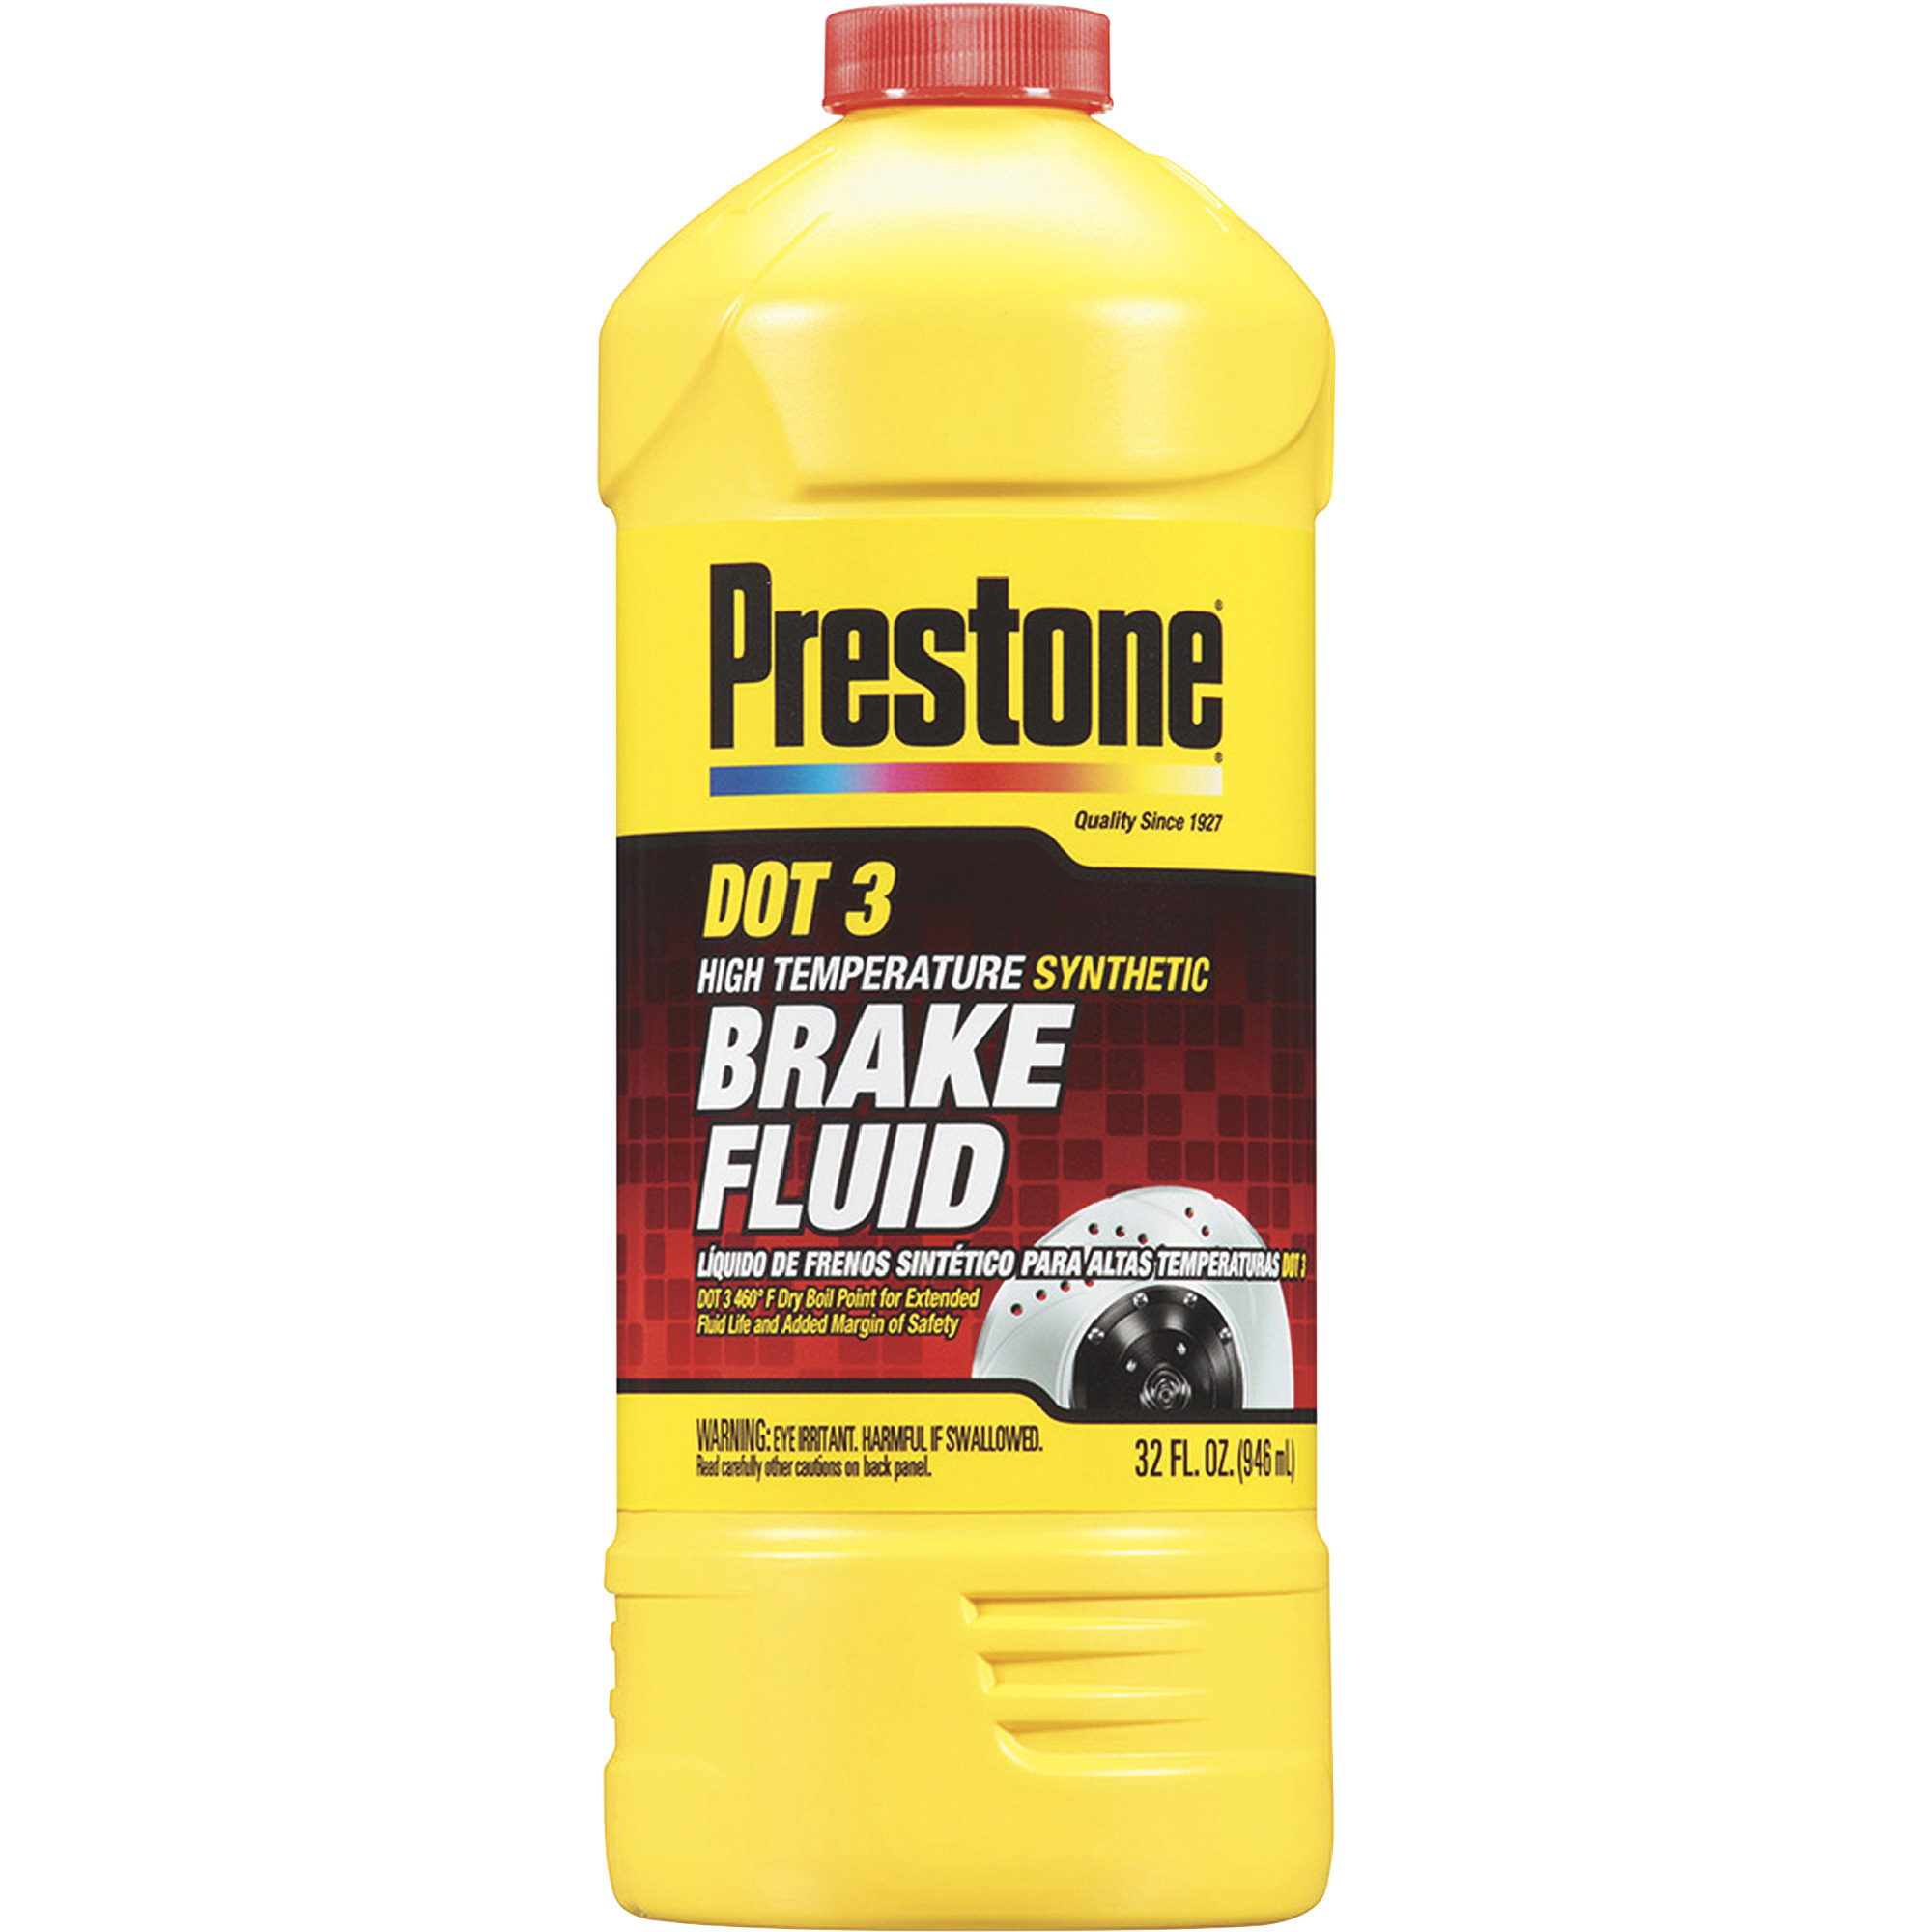 Prestone DOT 3 High Temperature Synthetic Brake Fluid â 32oz. Bottle, Model PRESAS401Y